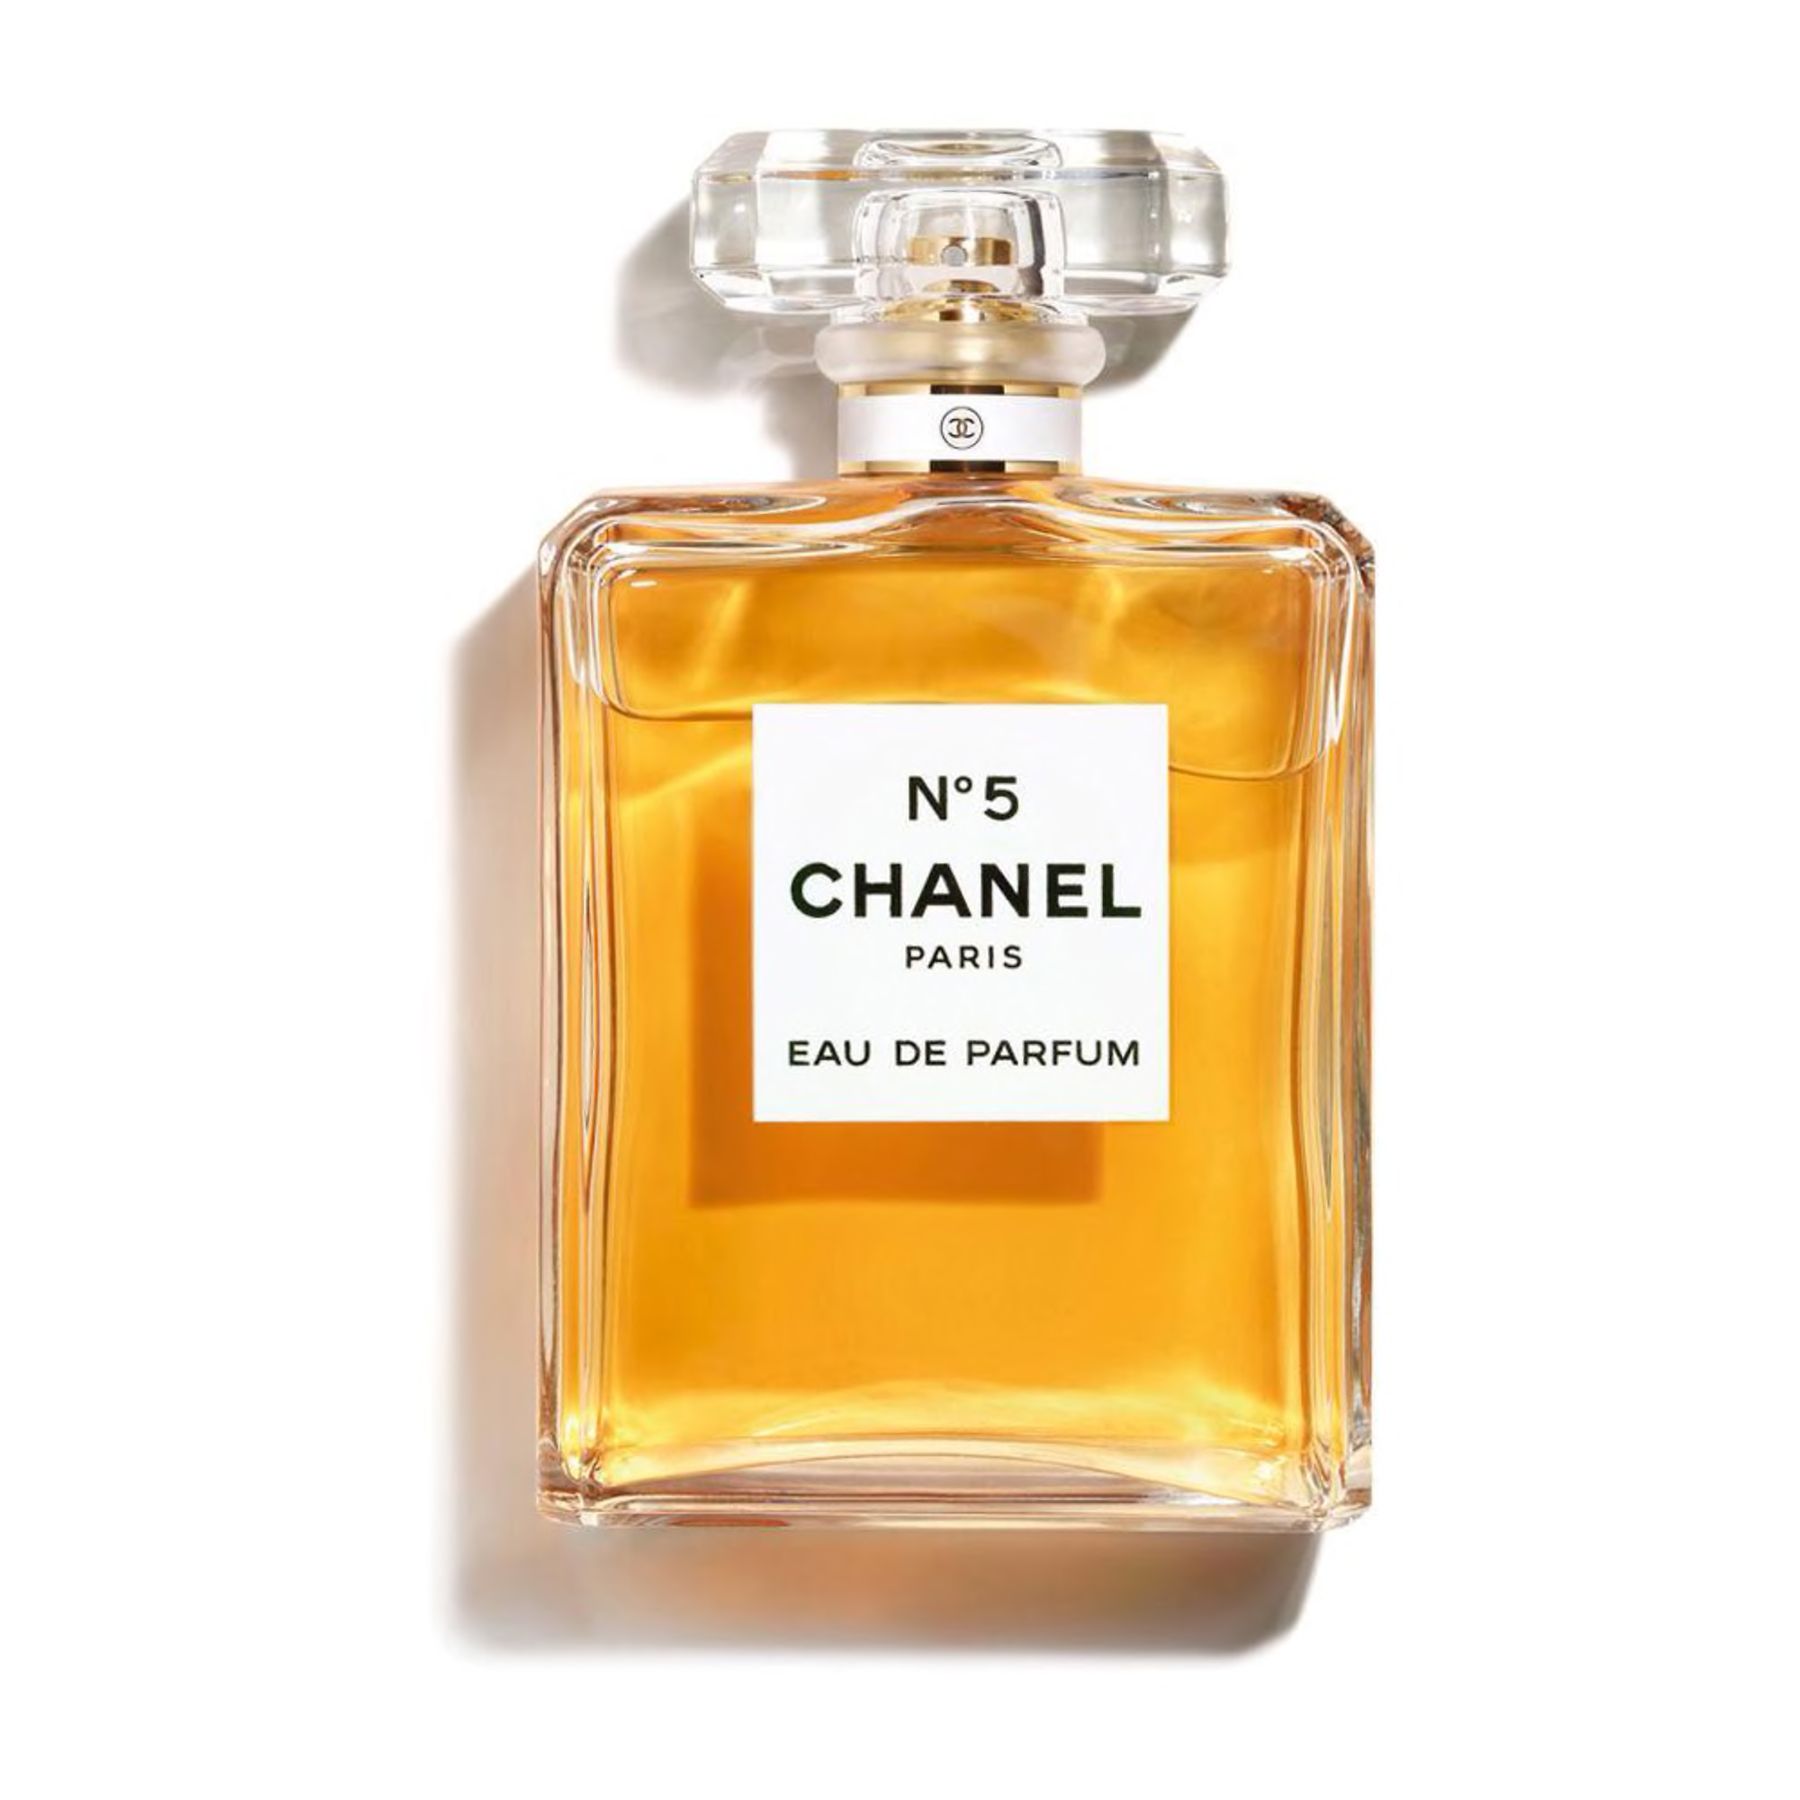 Beste gavene til bestemor - Chanel nr. 5 Eau de Parfum